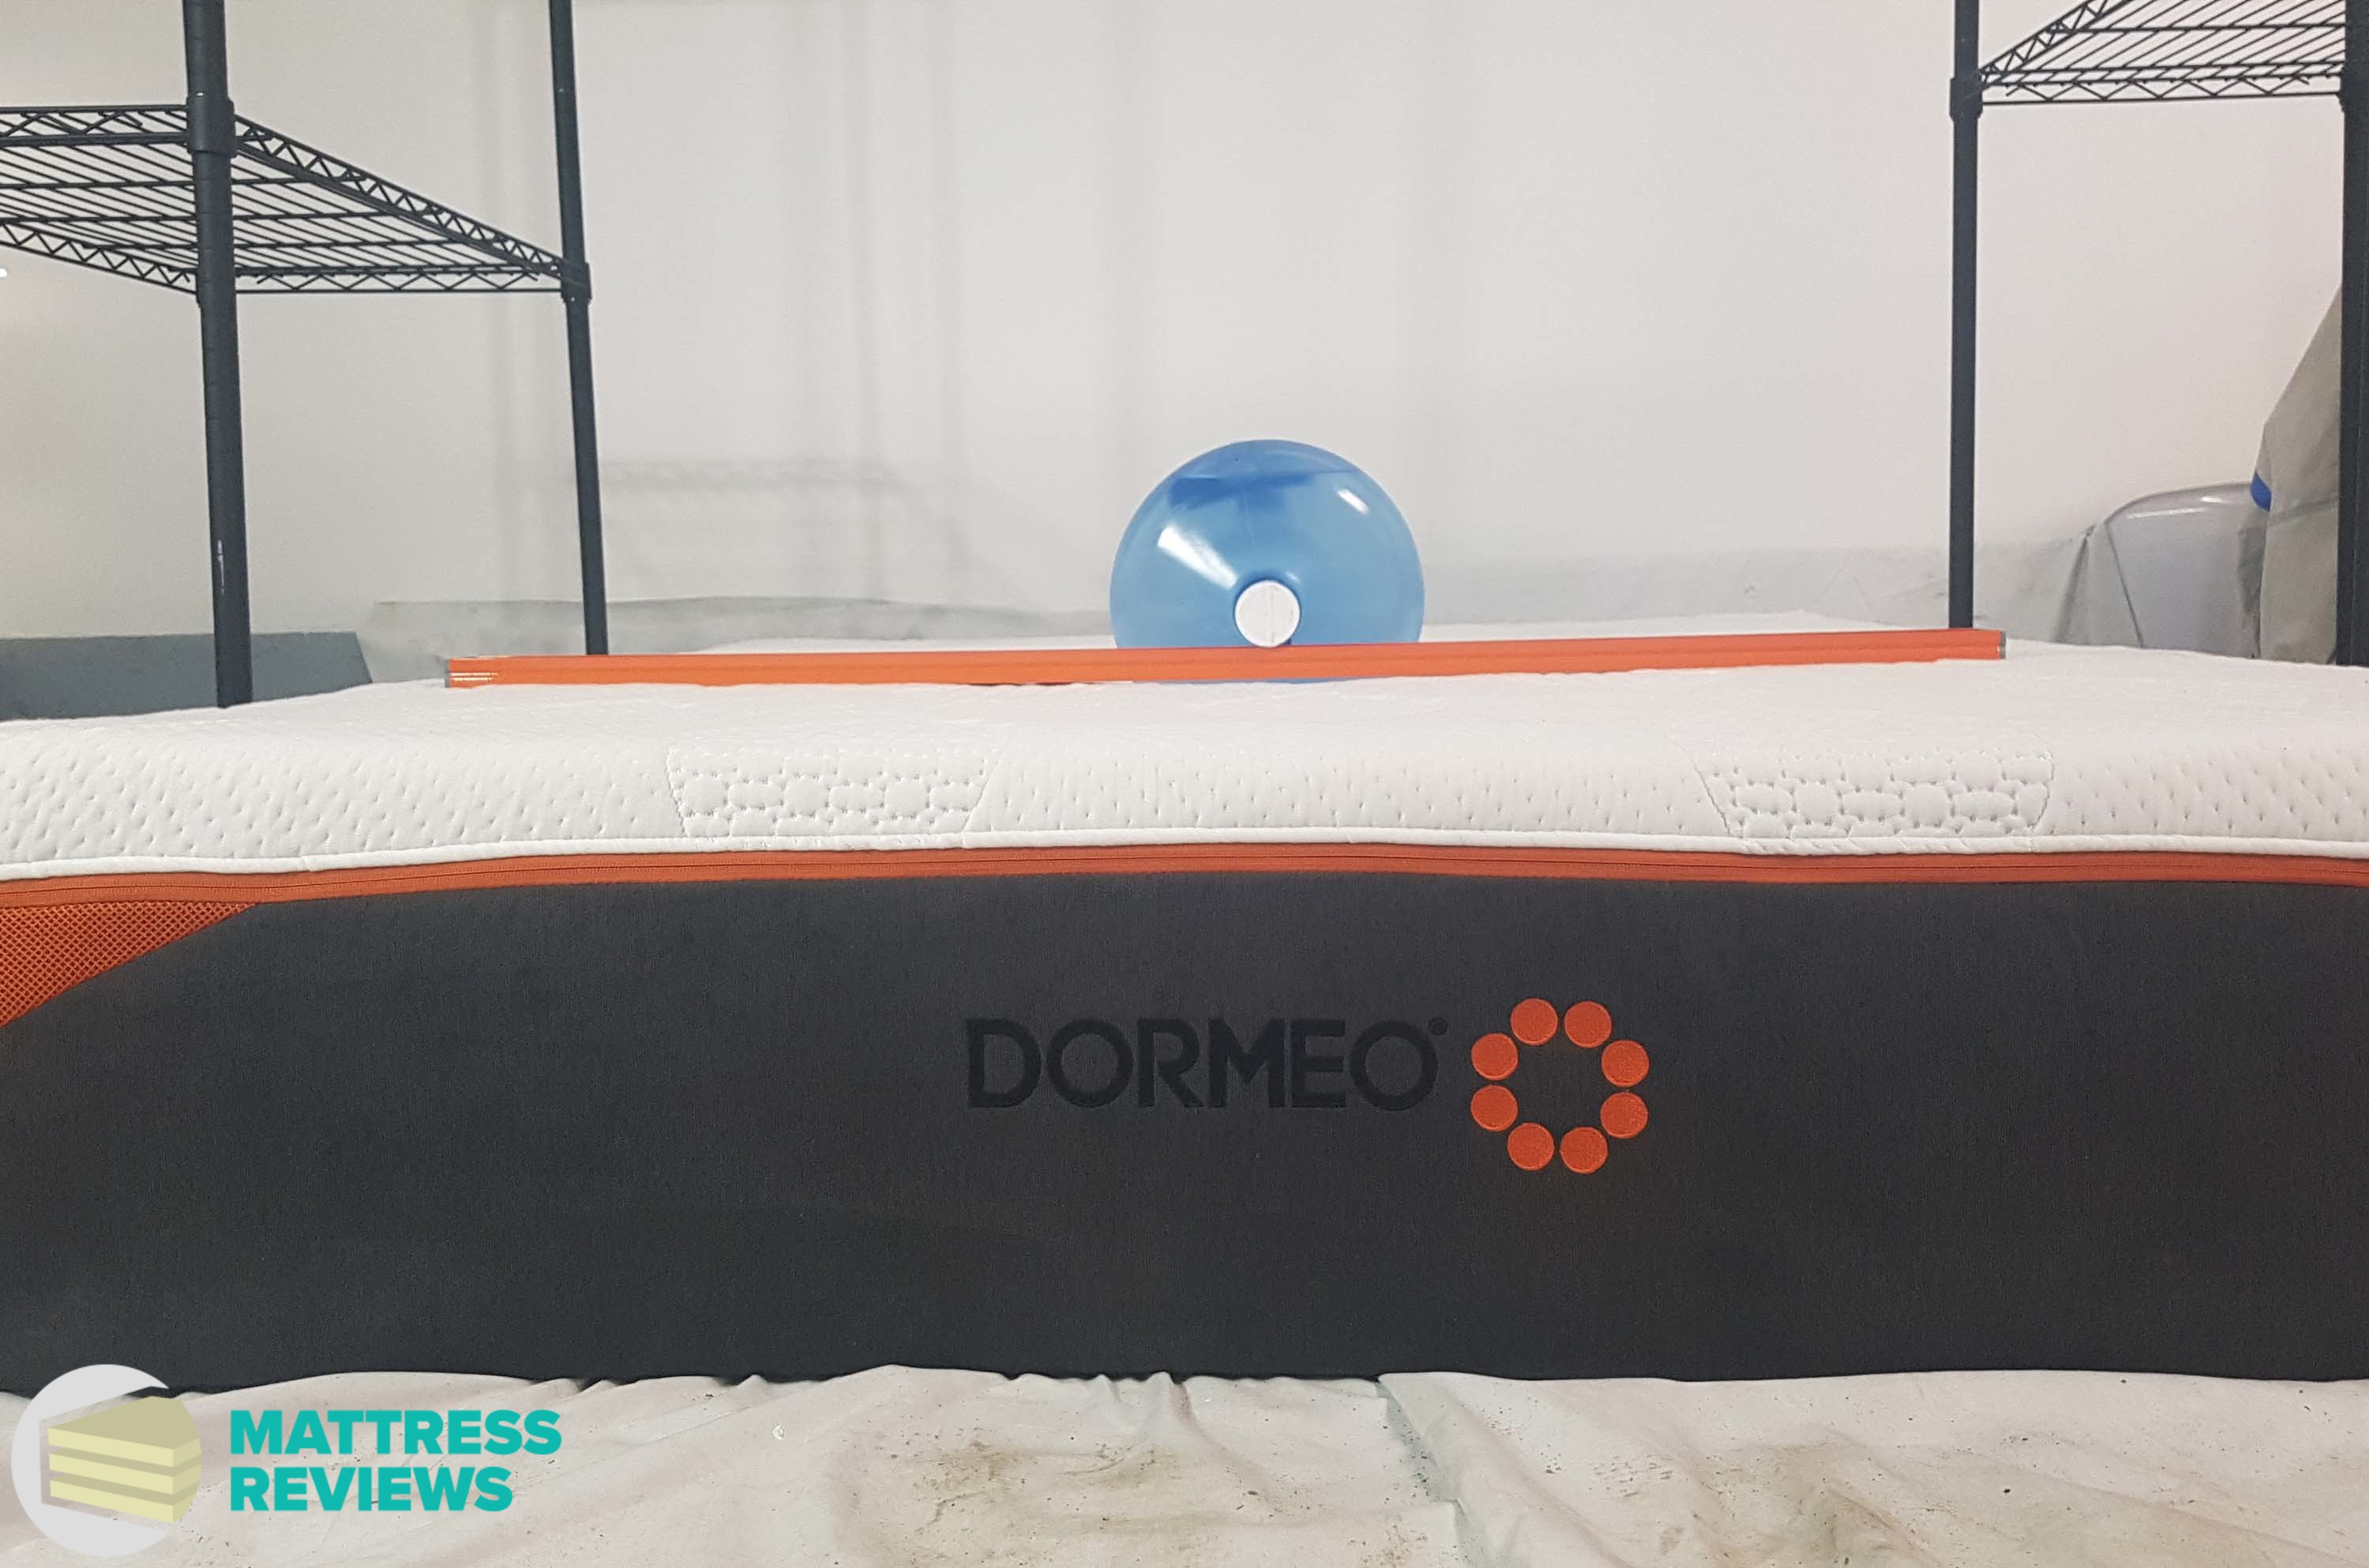 Image of the Dormeo mattress firmness test.